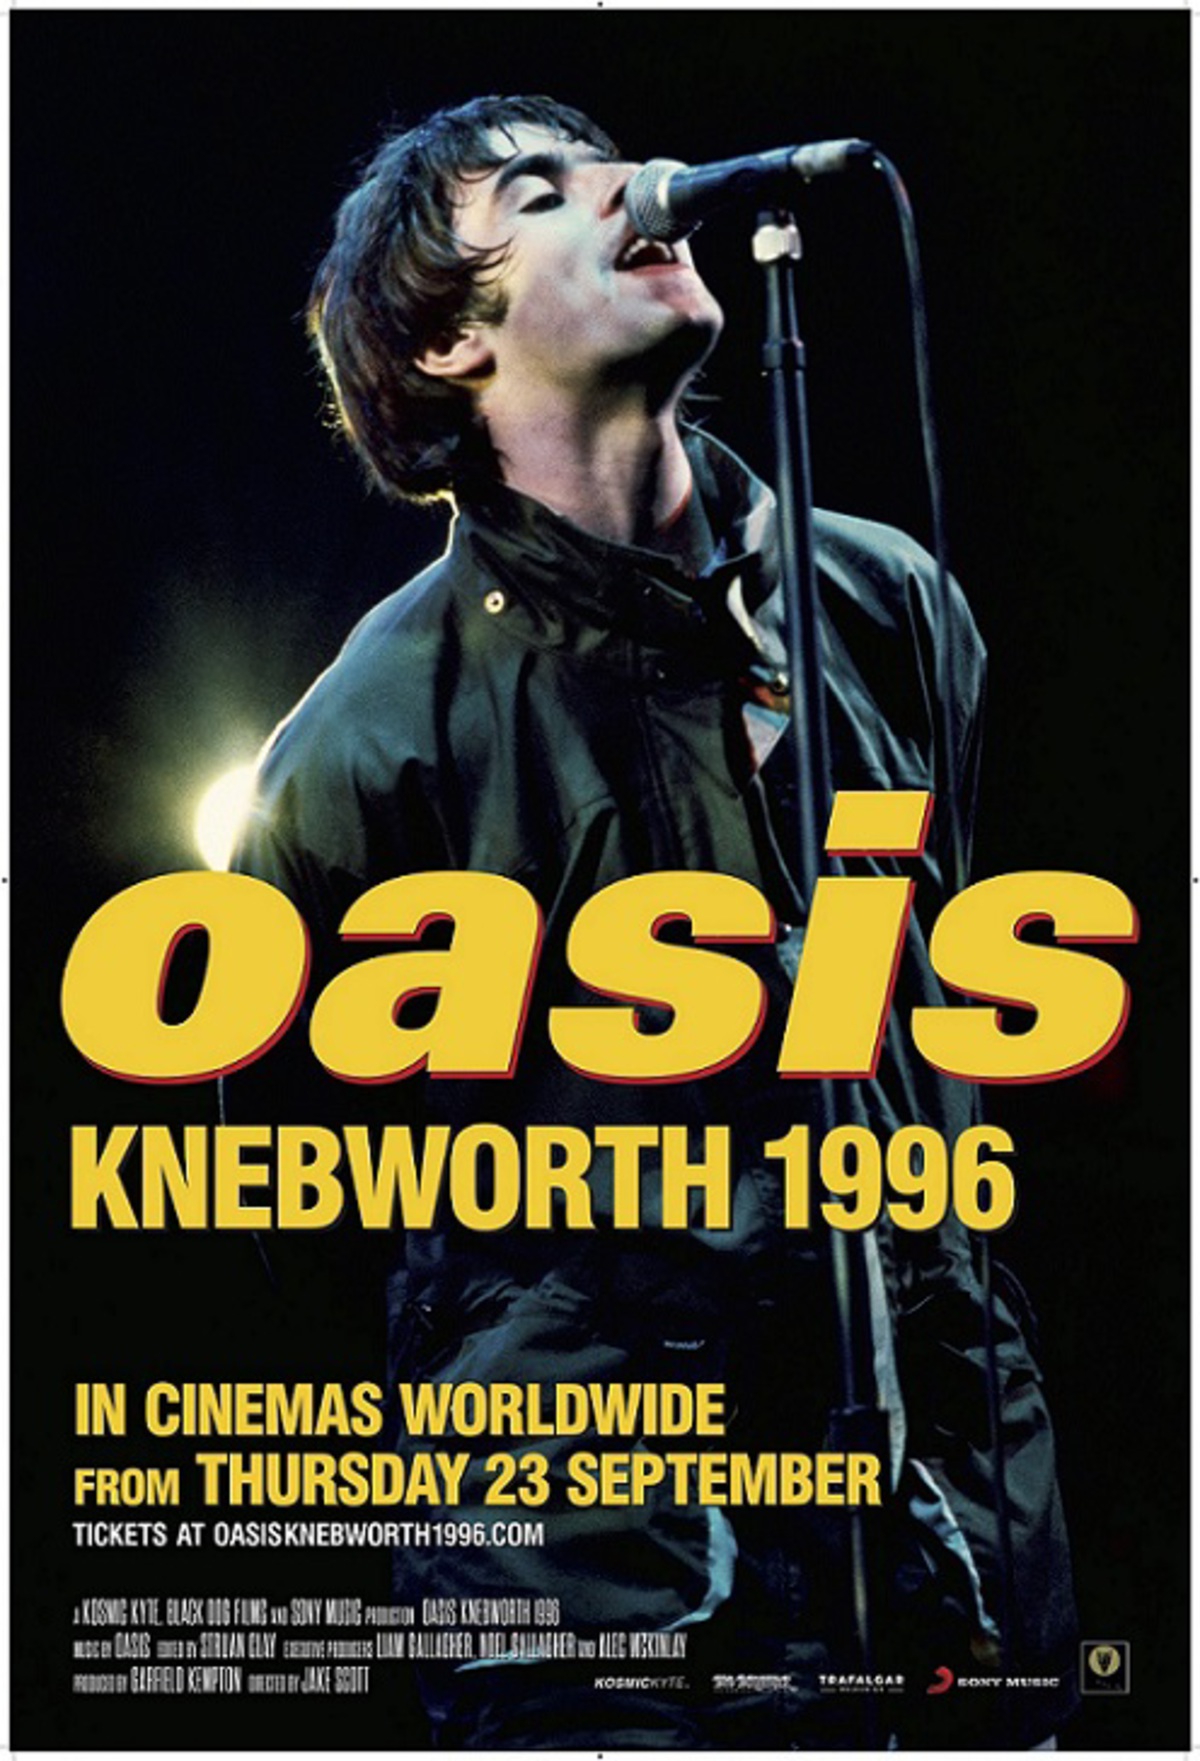 Oasis 映画 オアシス ネブワース1996 9 23日本公開決定 名曲 Morning Glory Don T Look Back In Anger 使用した予告映像公開 ライヴ盤11 19リリースも